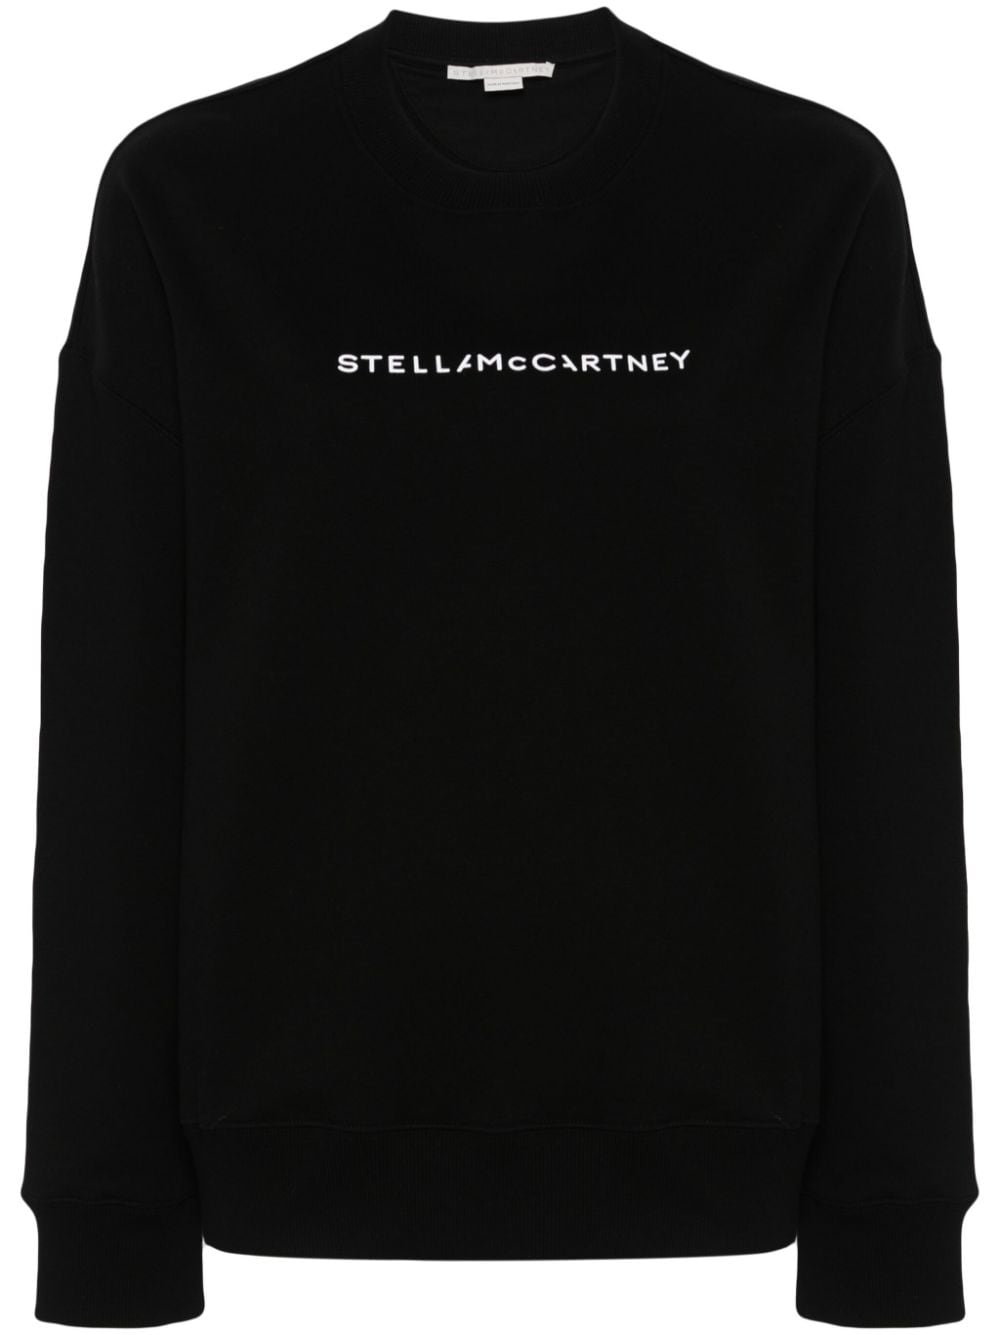 Logo-print cotton sweatshirt<BR/><BR/><BR/>